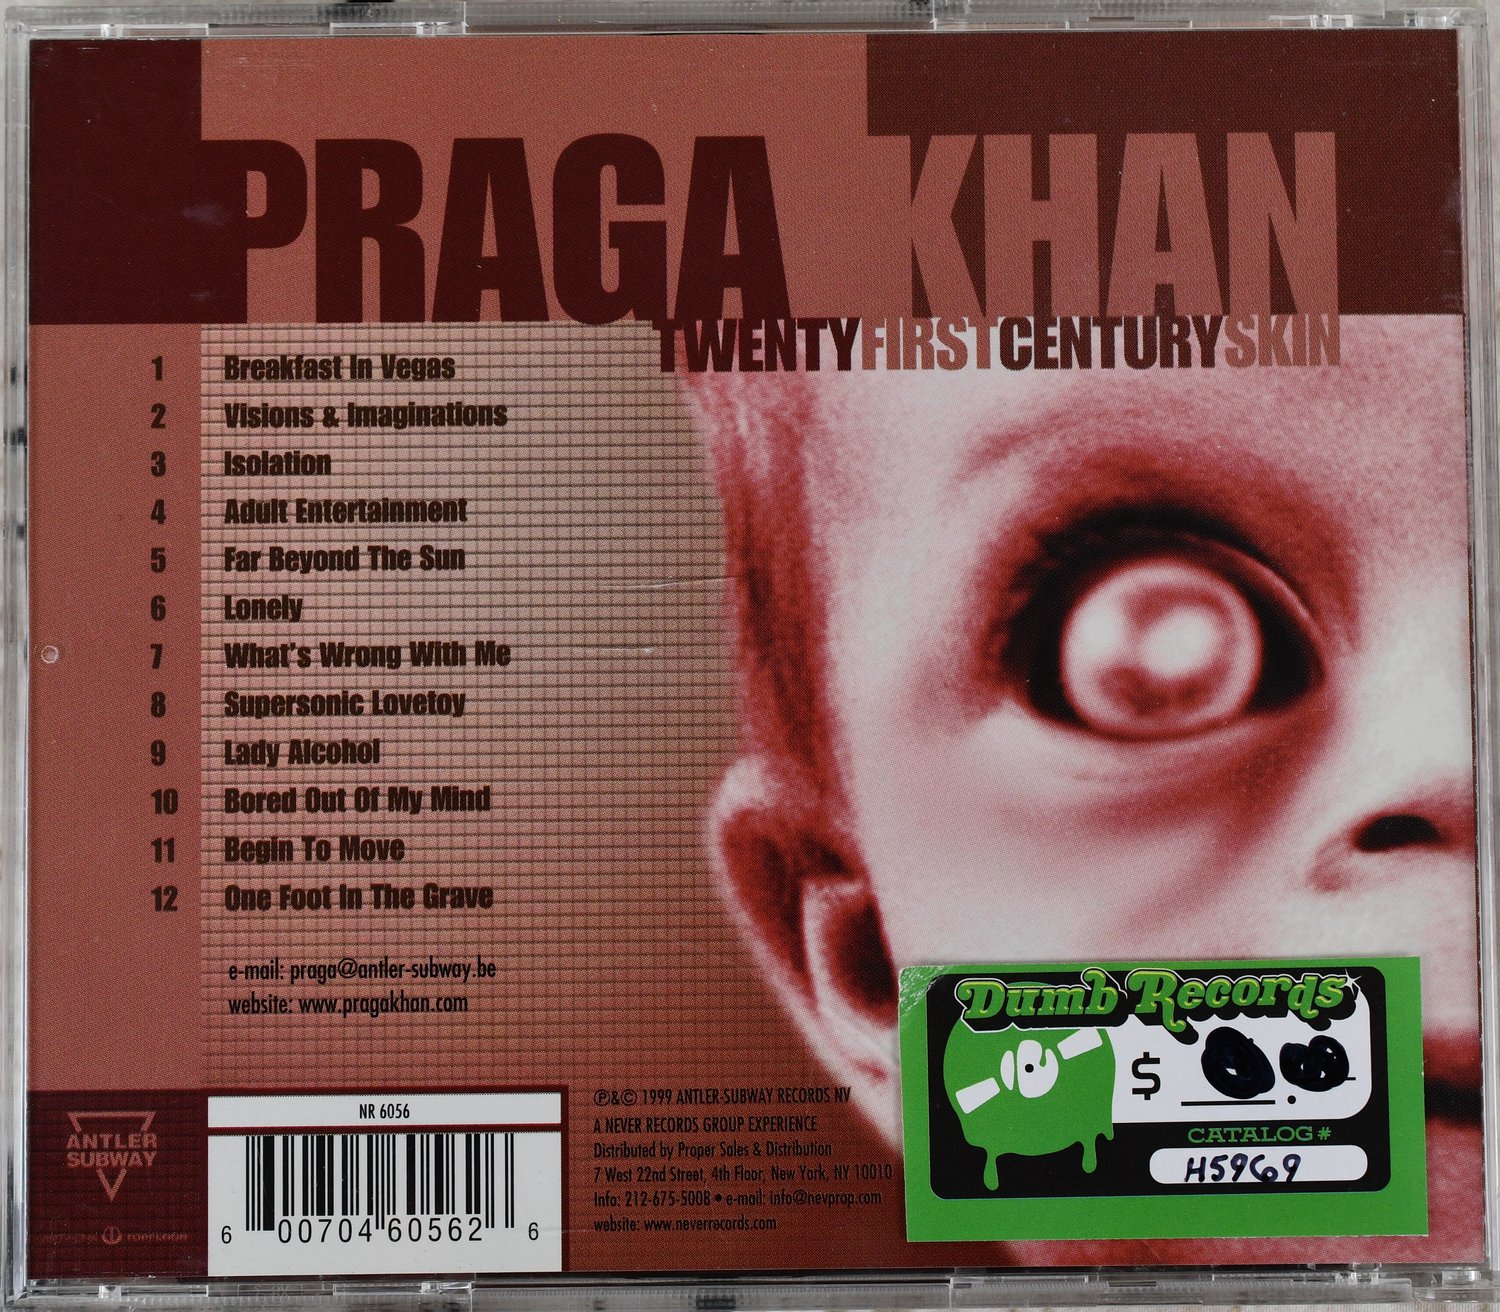 Praga Khan – Twenty First Century Skin, Never Records – NR 6056,  Antler-Subway – NR 6056 — Spin N Round Music & Collectibles